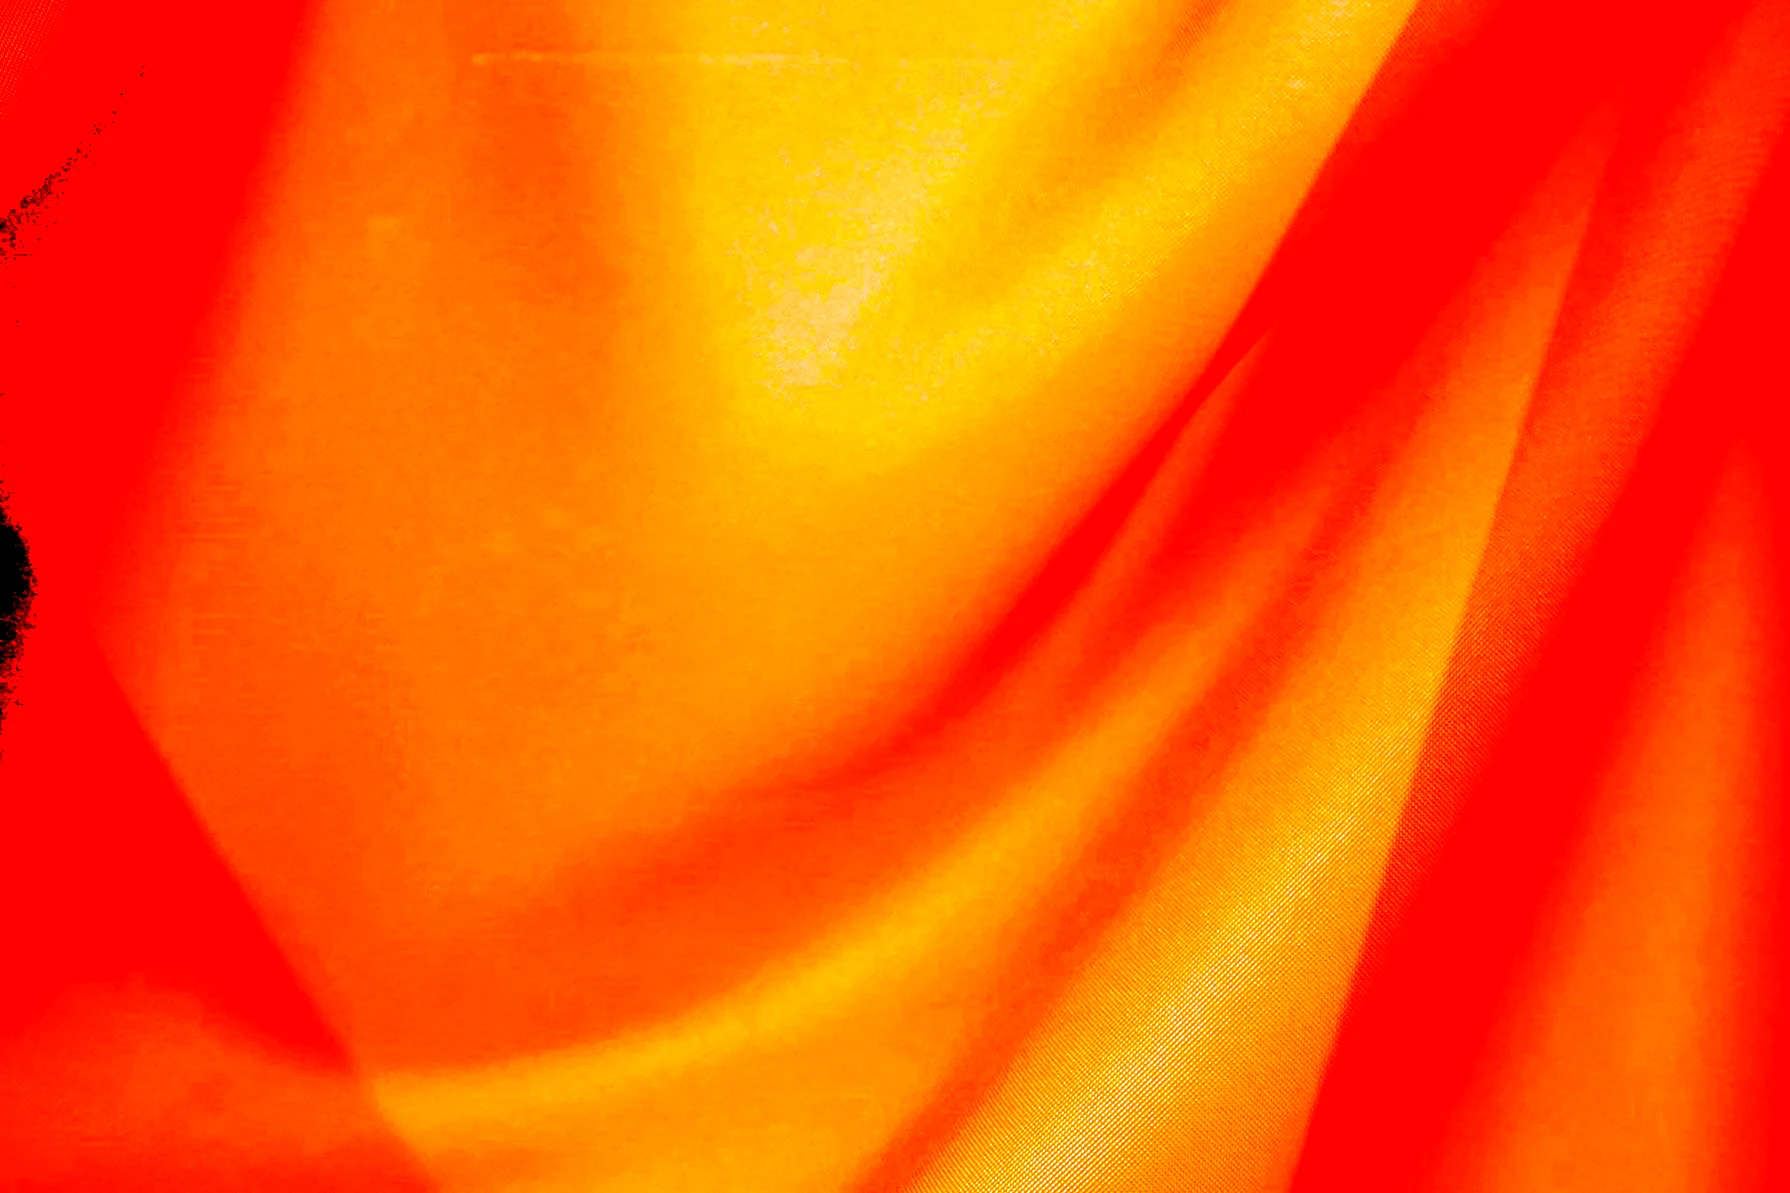 Оранжевый однотонный